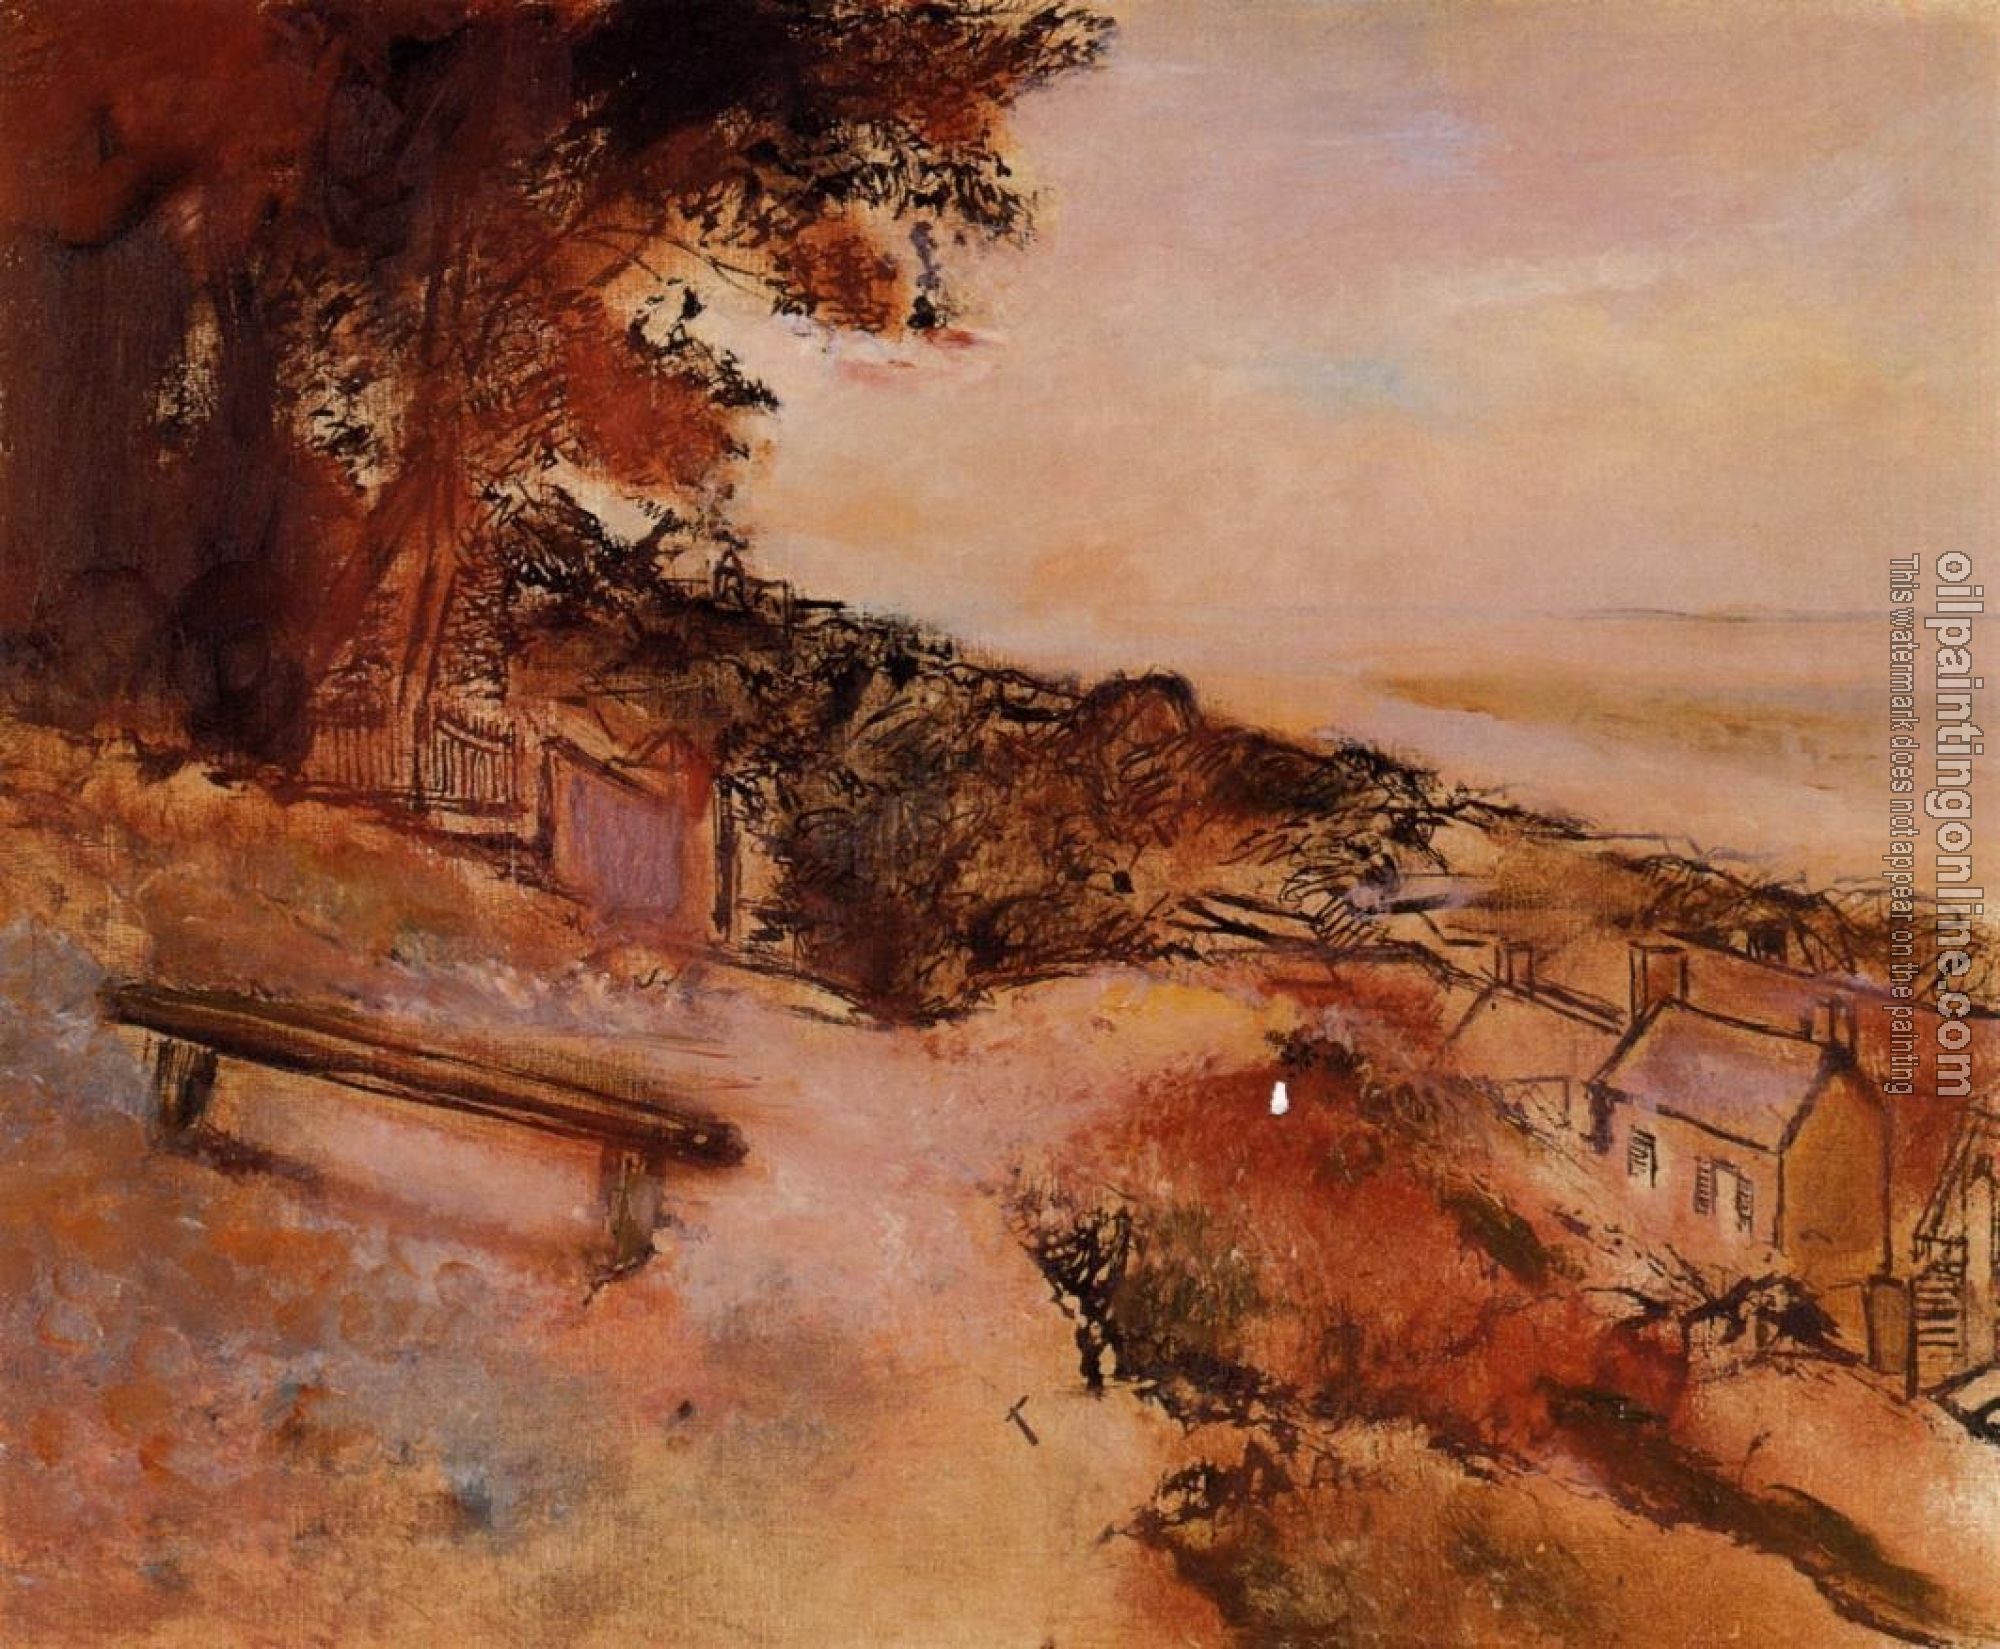 Degas, Edgar - Landscape by the Sea